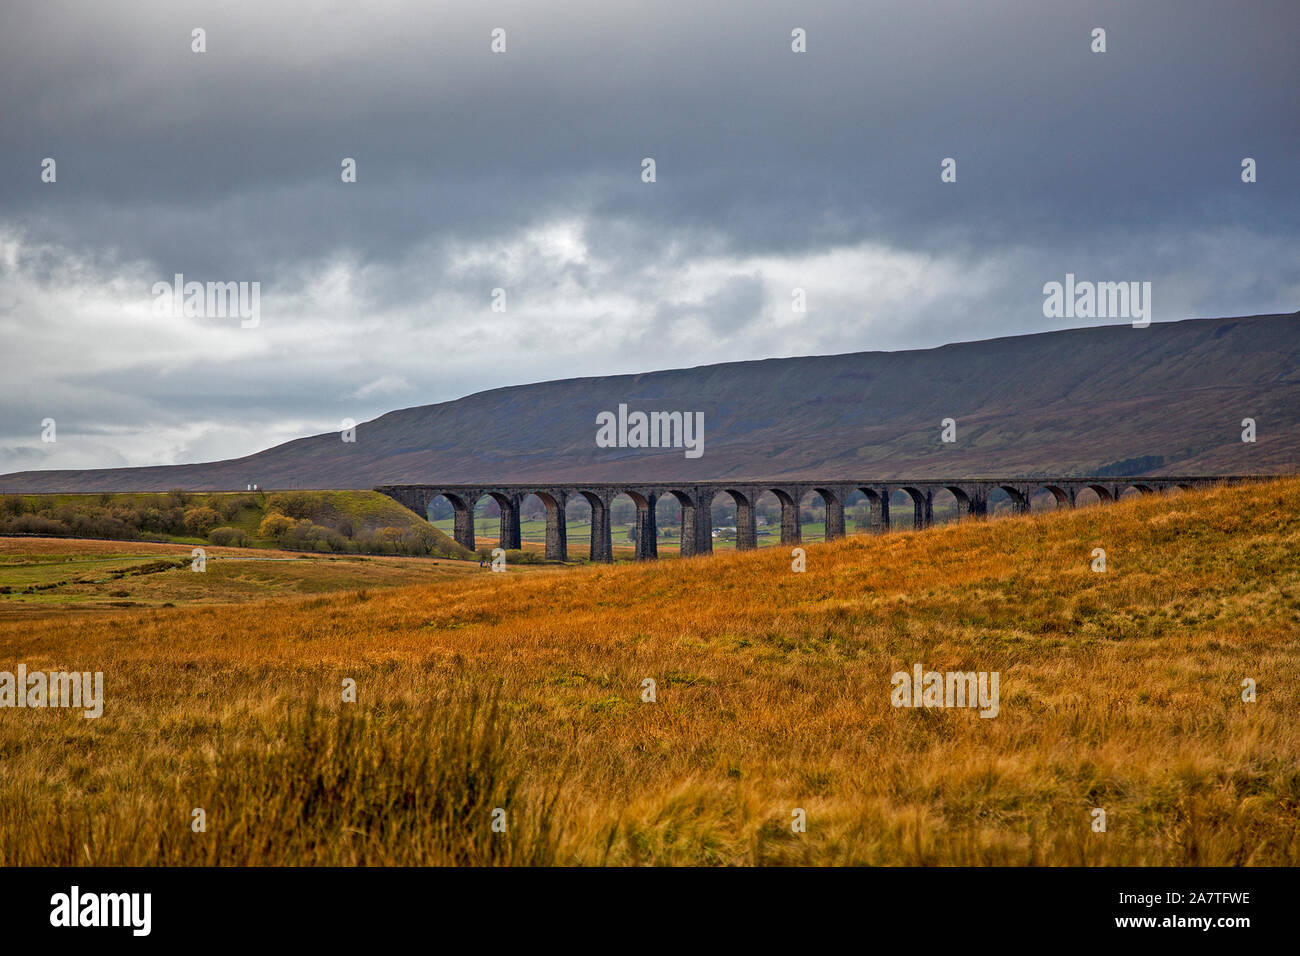 El viaducto en el Ribblehead liquidar a Carlisle línea ferroviaria Foto de stock